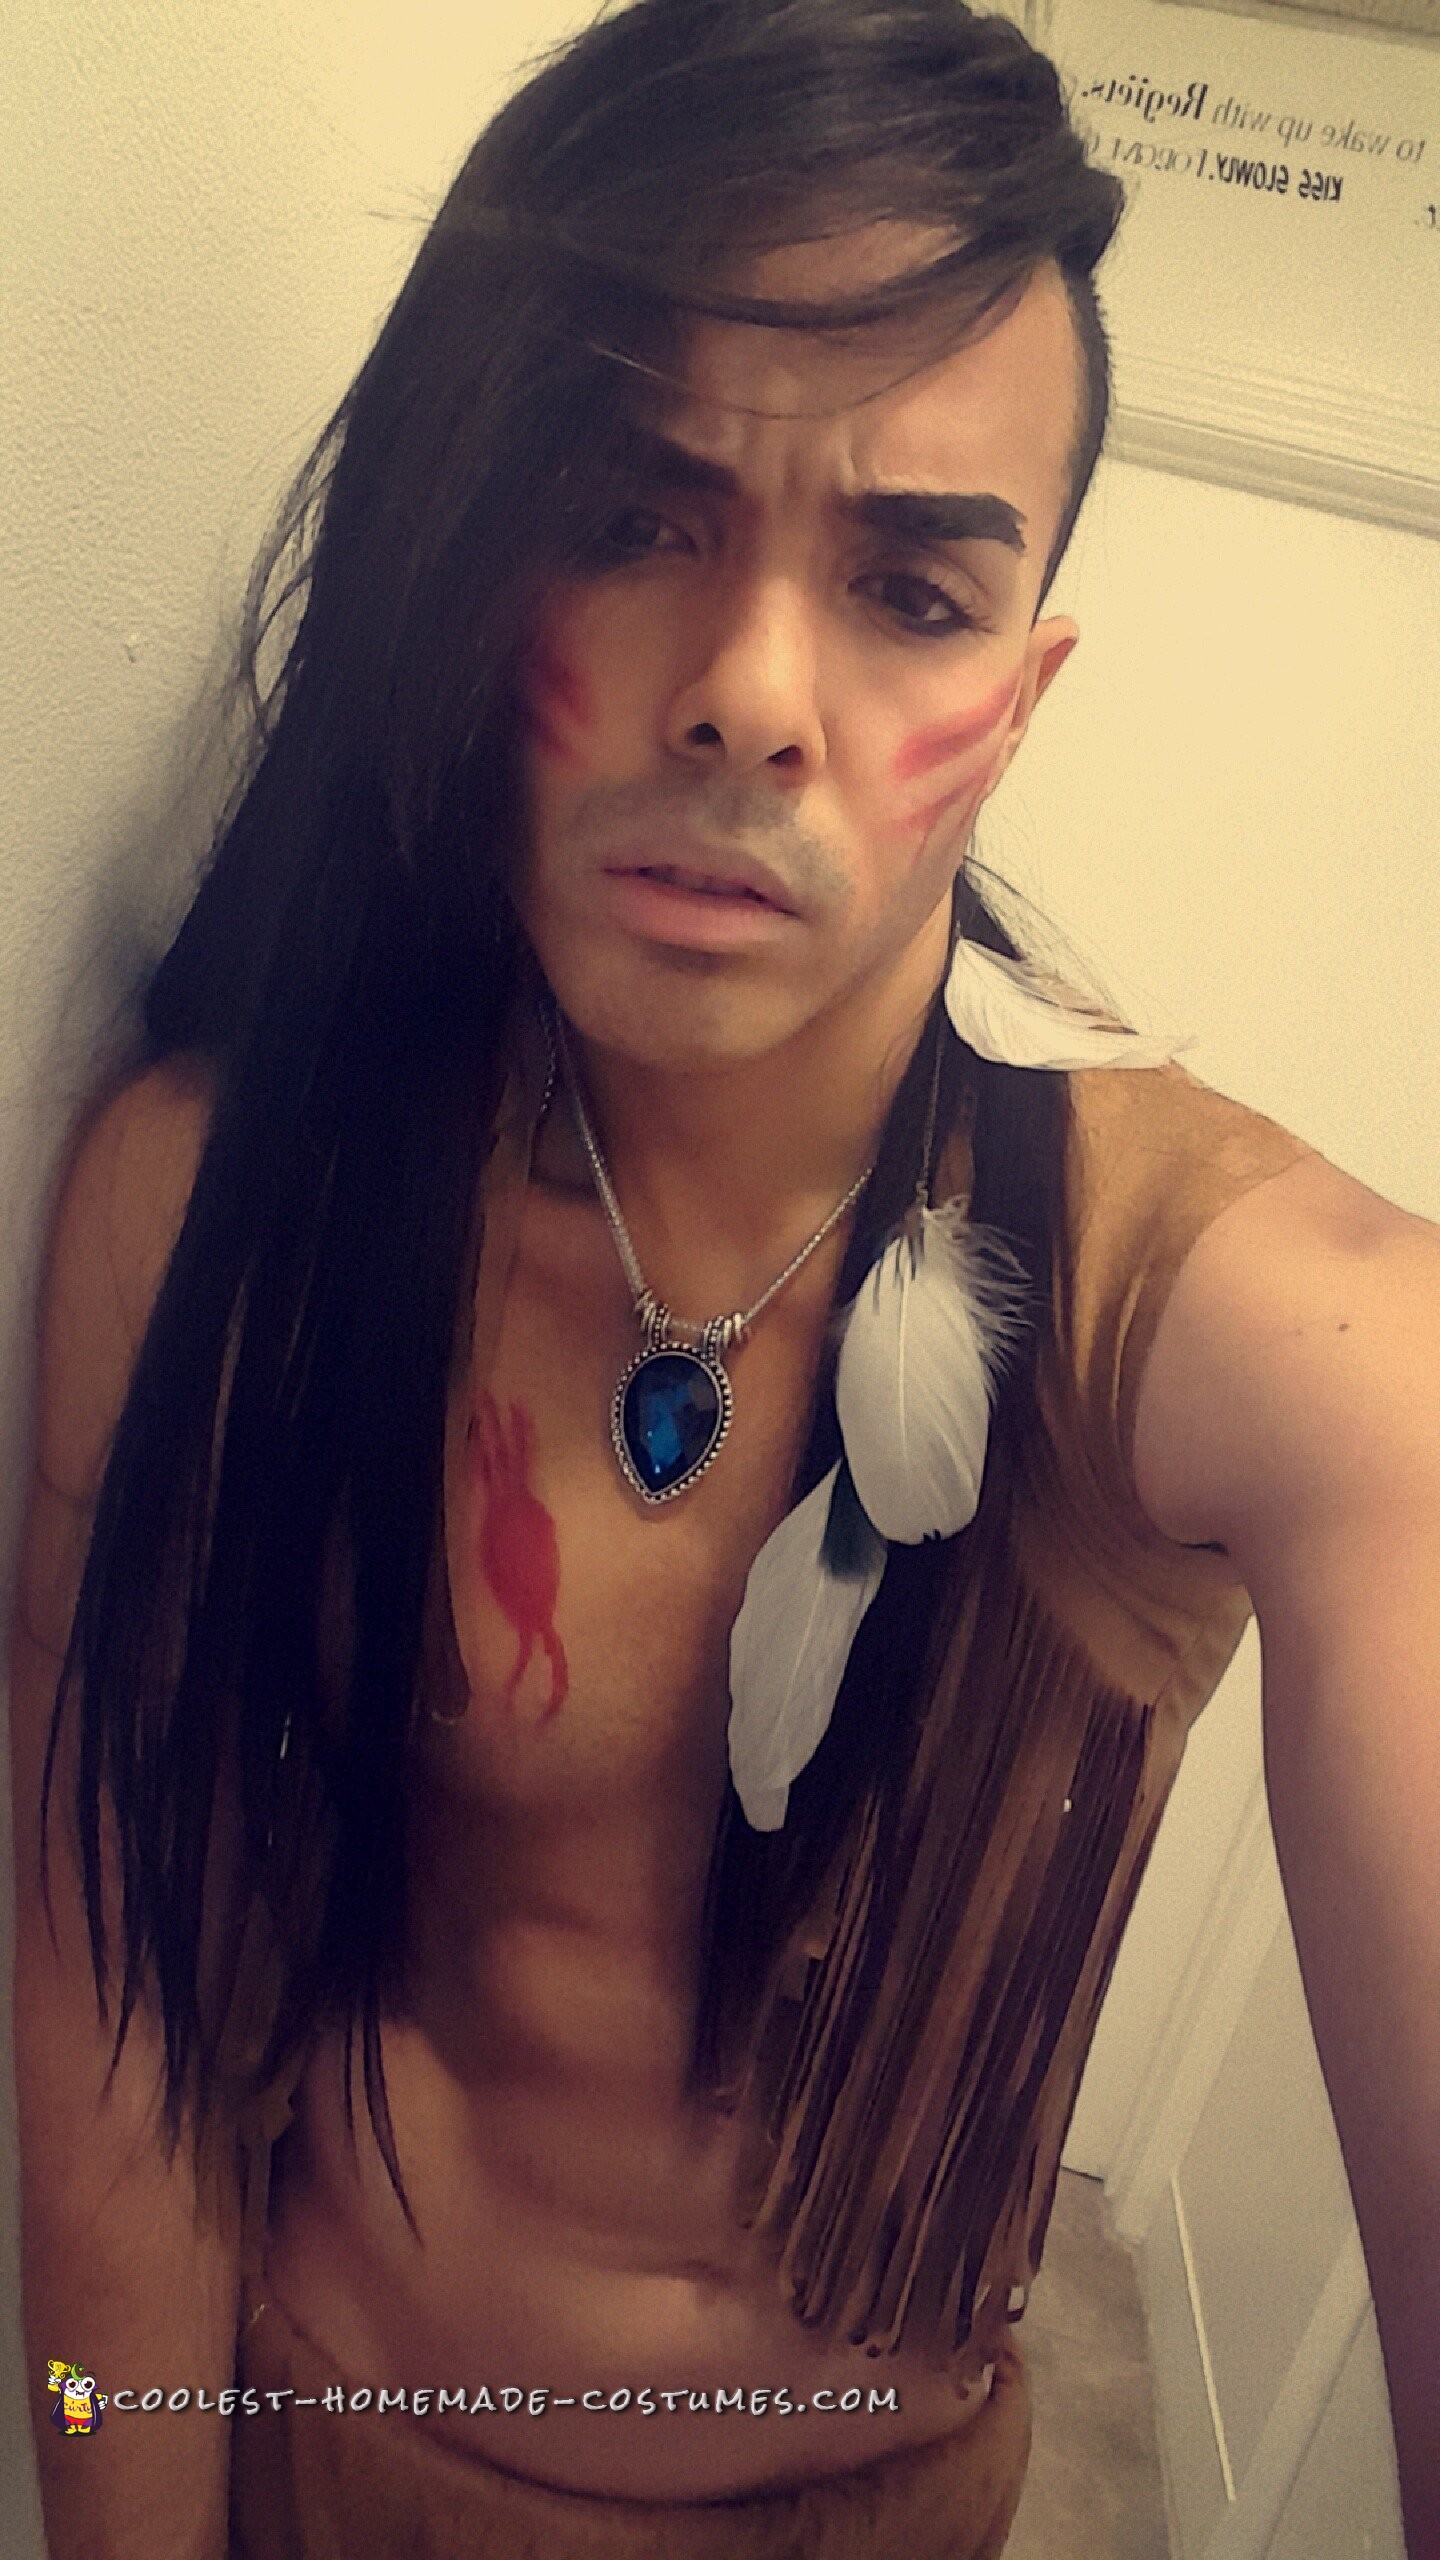 Guy Version of Pocahontas Costume